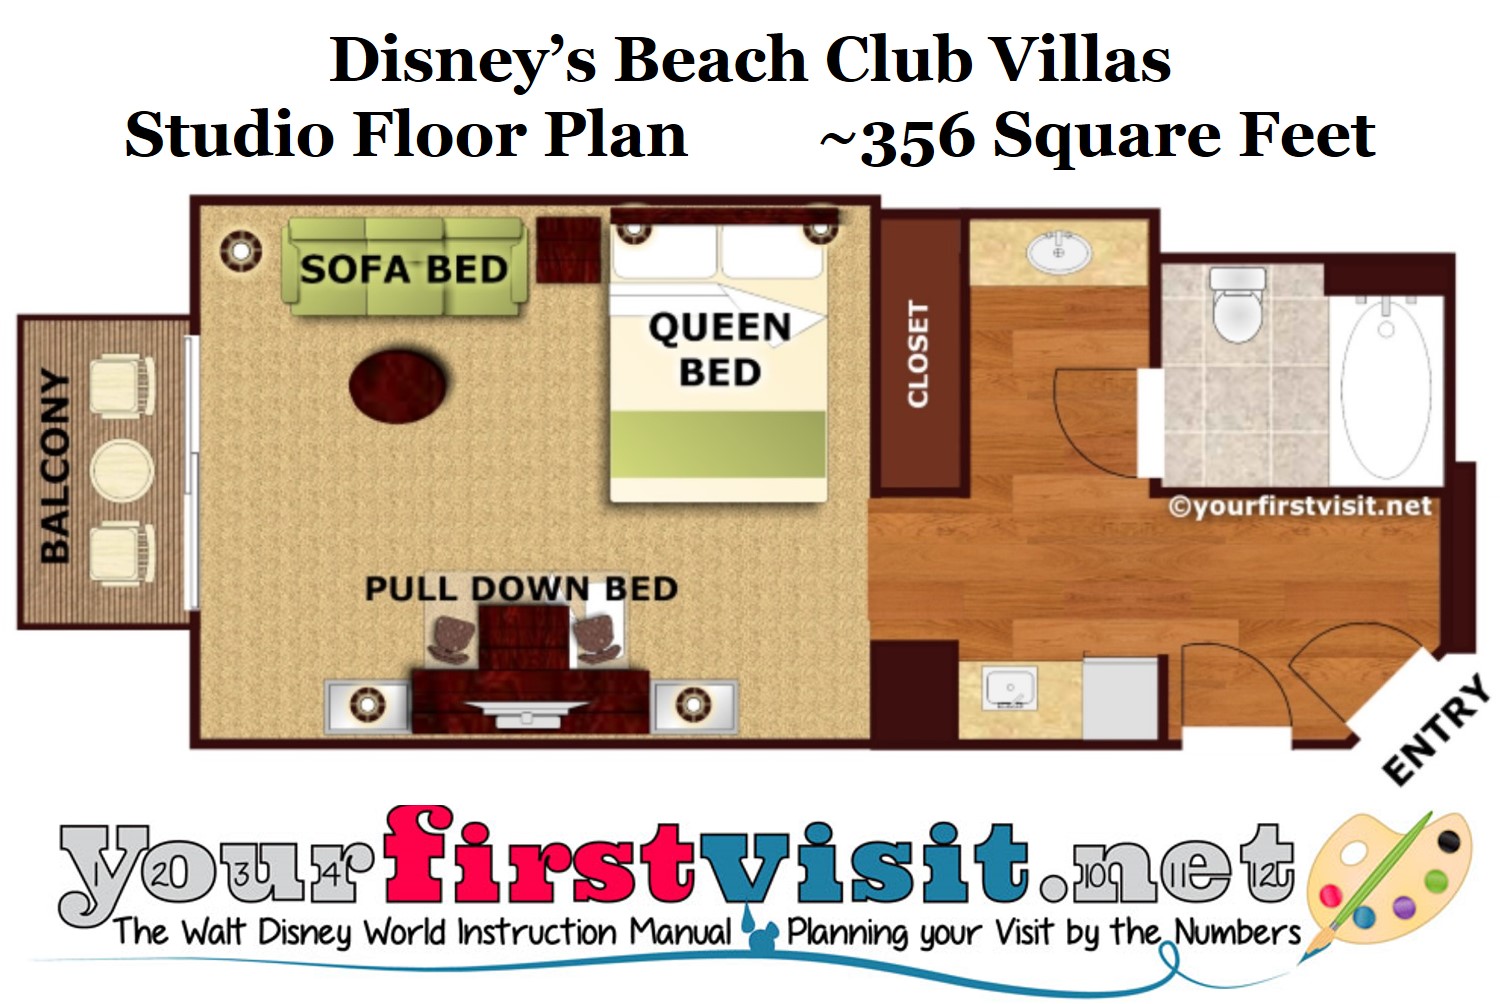 Studios at Disney's Beach Club Villas